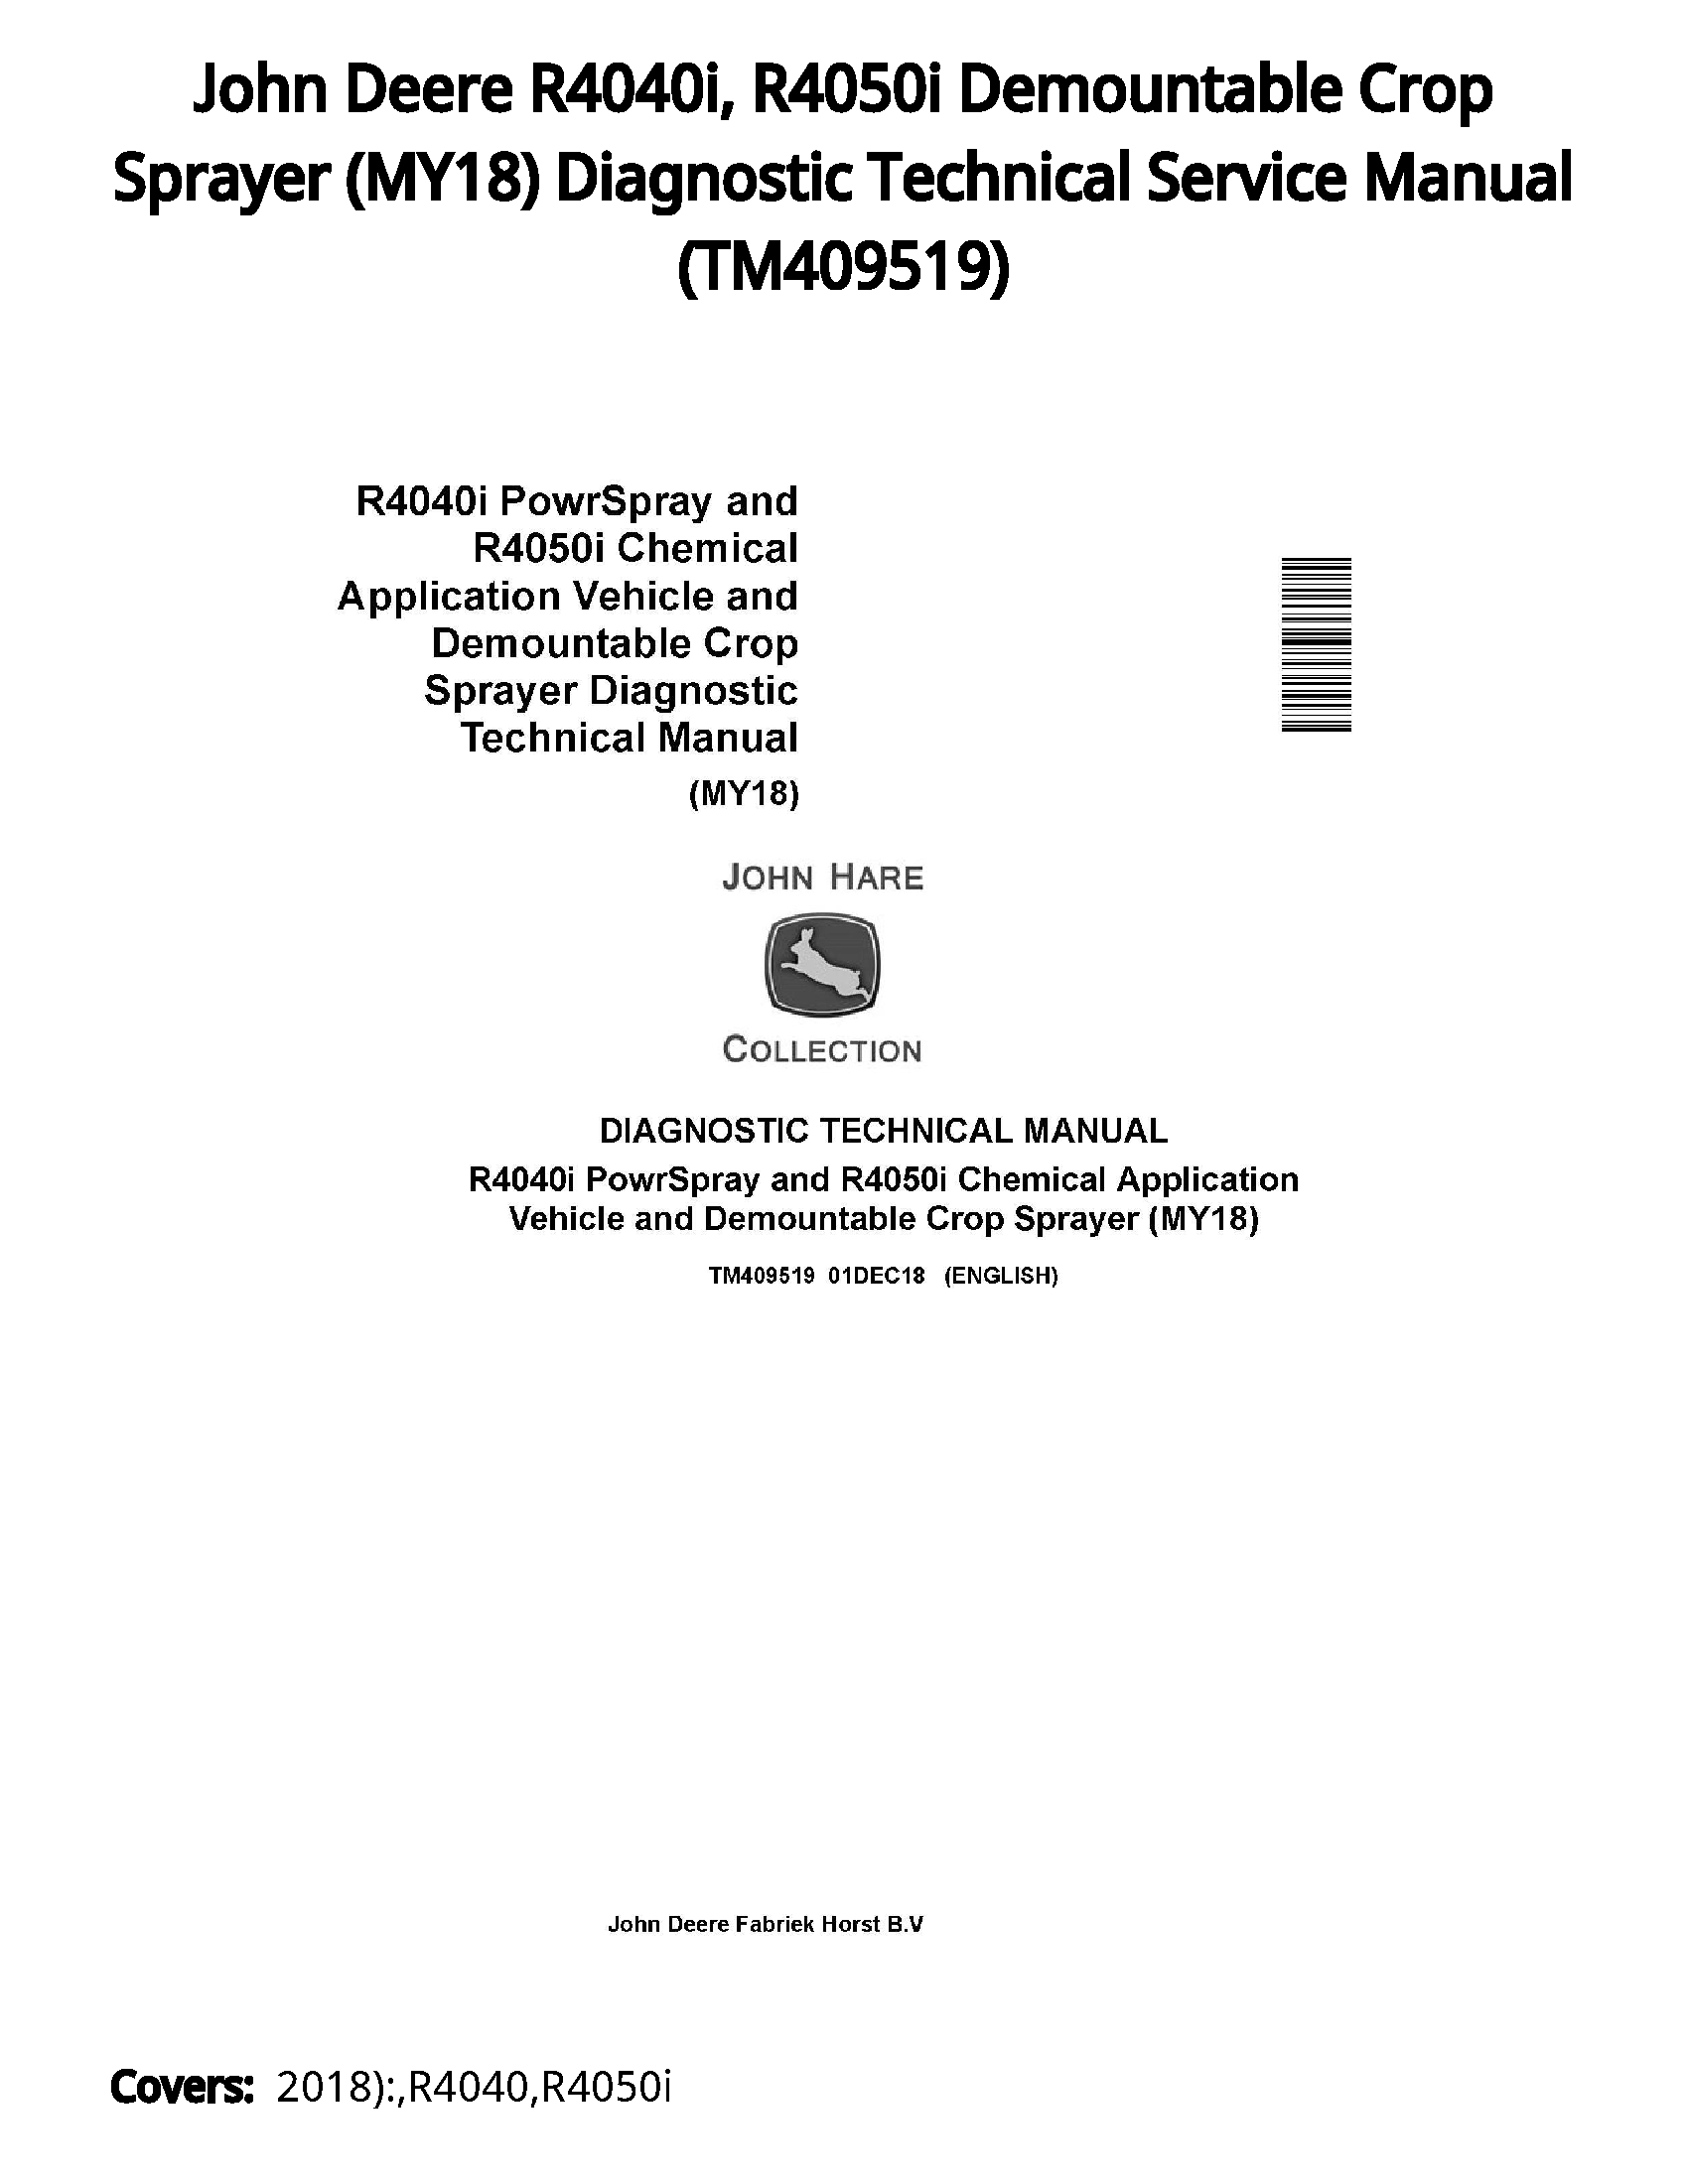 John Deere R4040i  R4050i Demountable Crop Sprayer (MY18) Diagnostic Technical Service Manual - TM409519